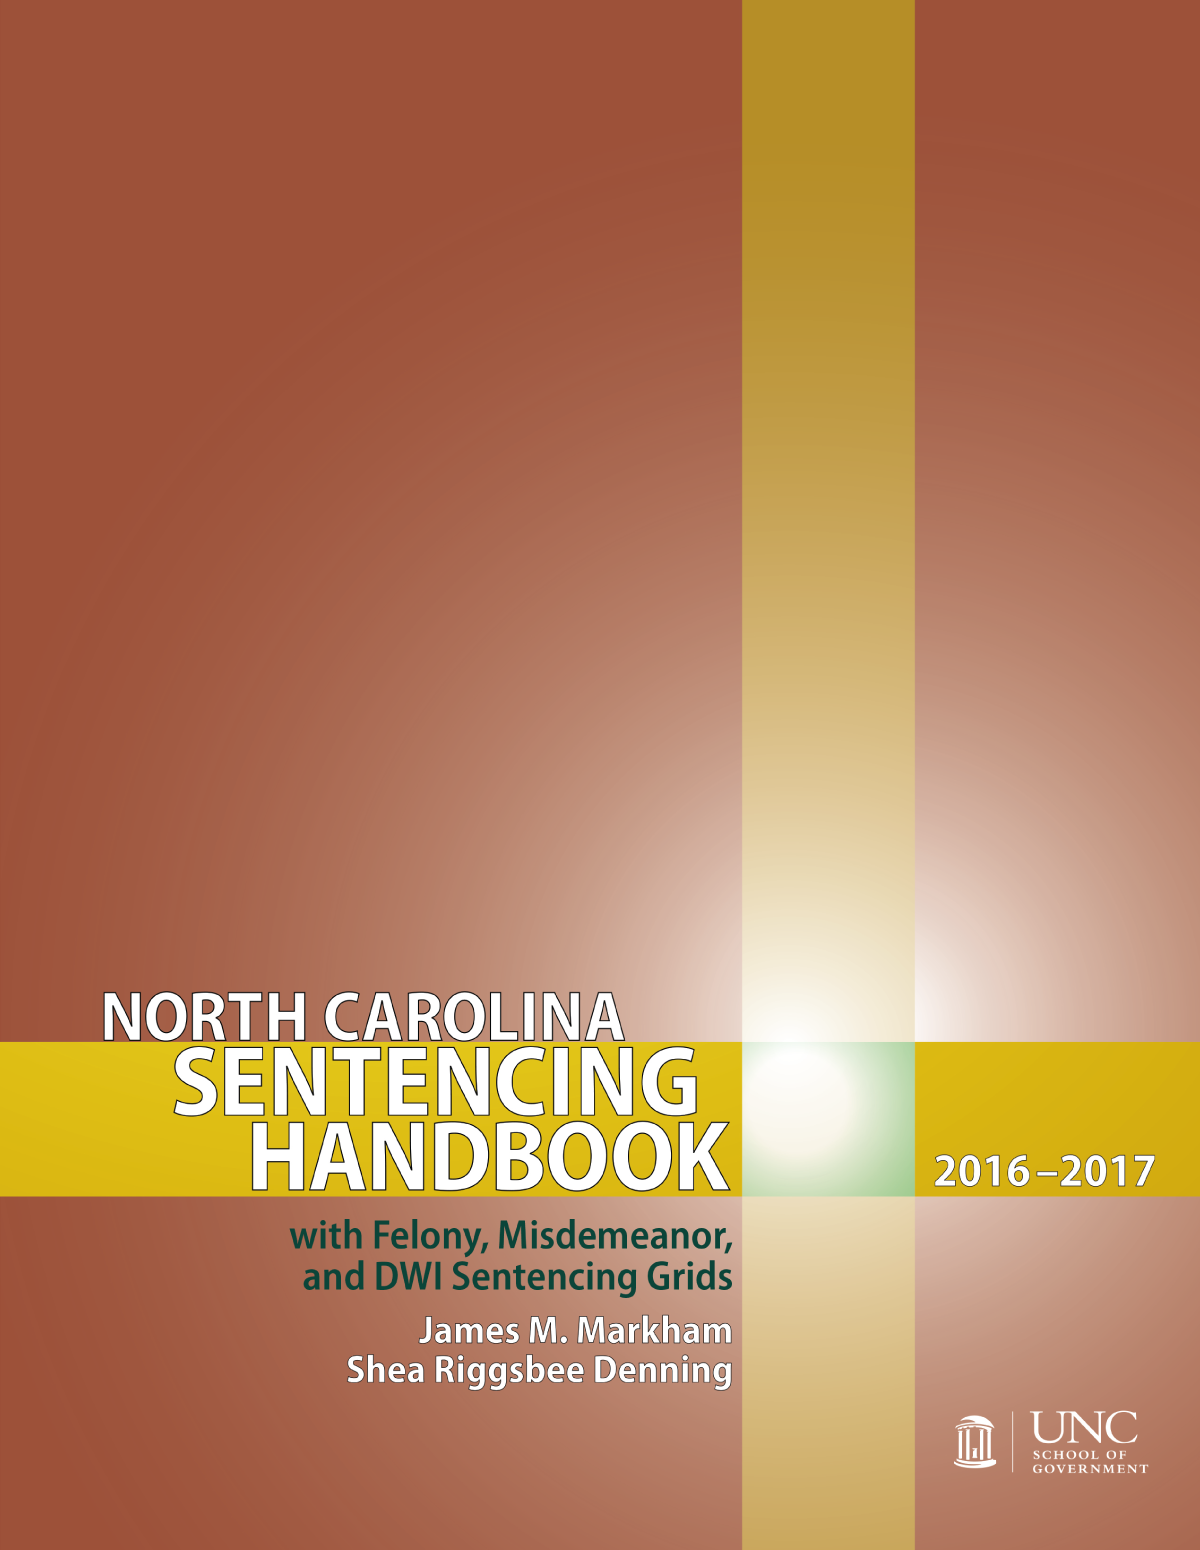 North Carolina Sentencing Handbook with Felony, Misdemeanor, and DWI Sentencing Grids, 2016-2017